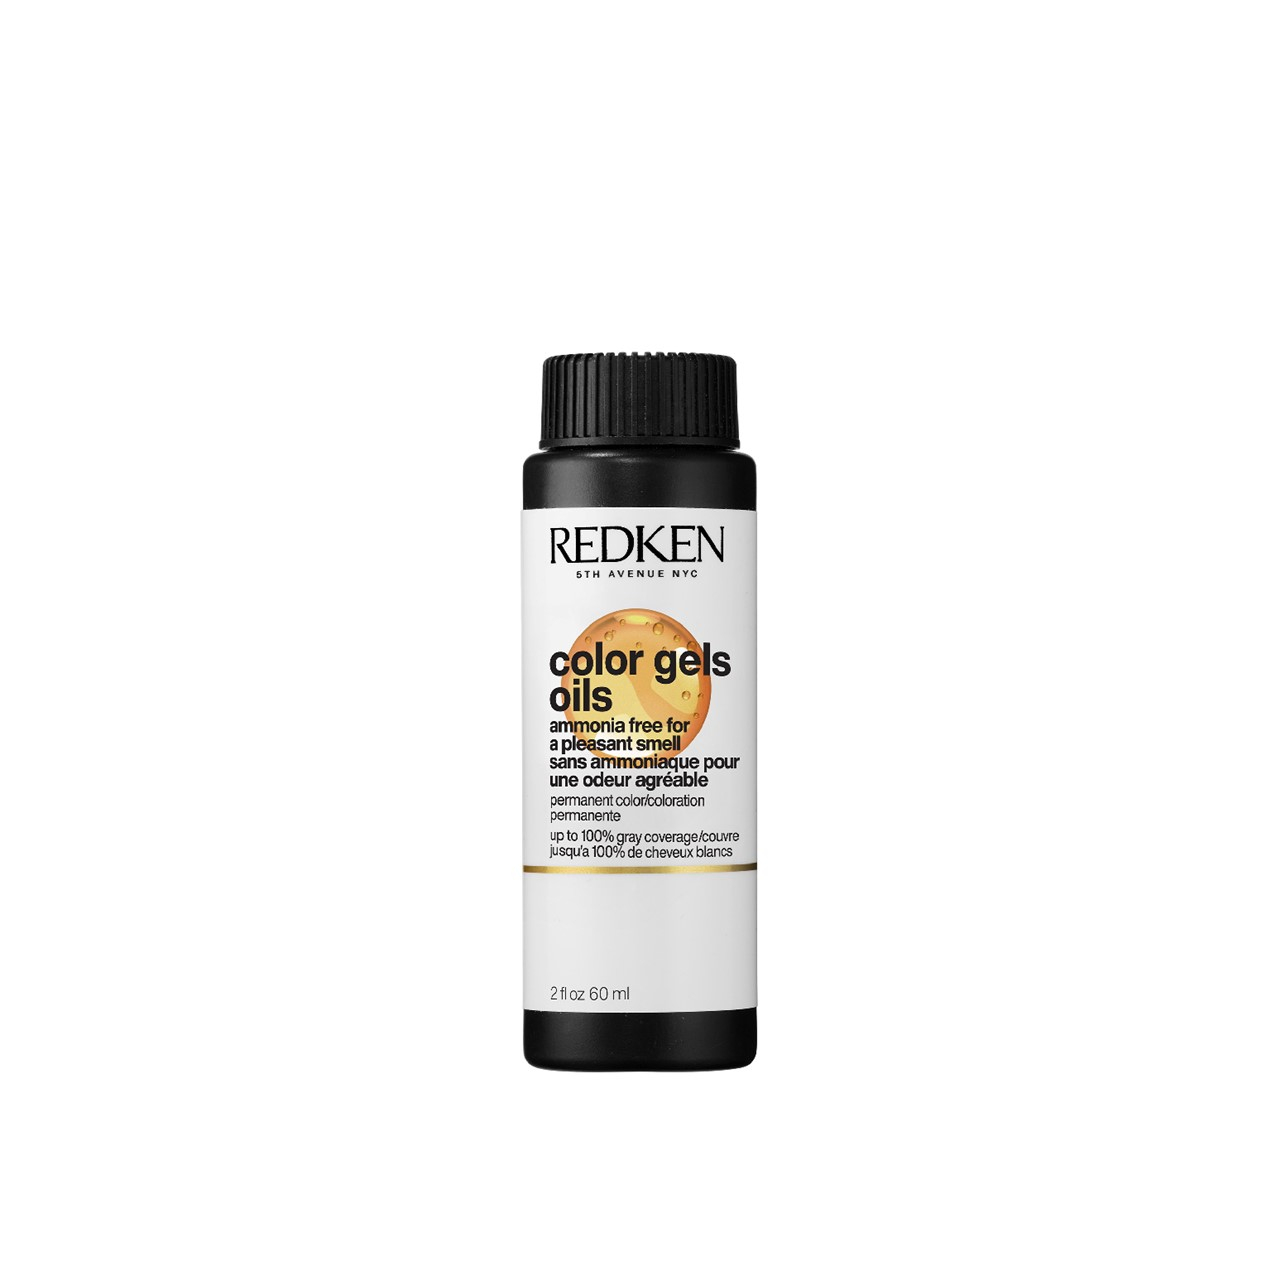 Redken Color Gels Oils 5NN Cafe Mocha Permanent Hair Dye 60ml (2.03 fl oz)